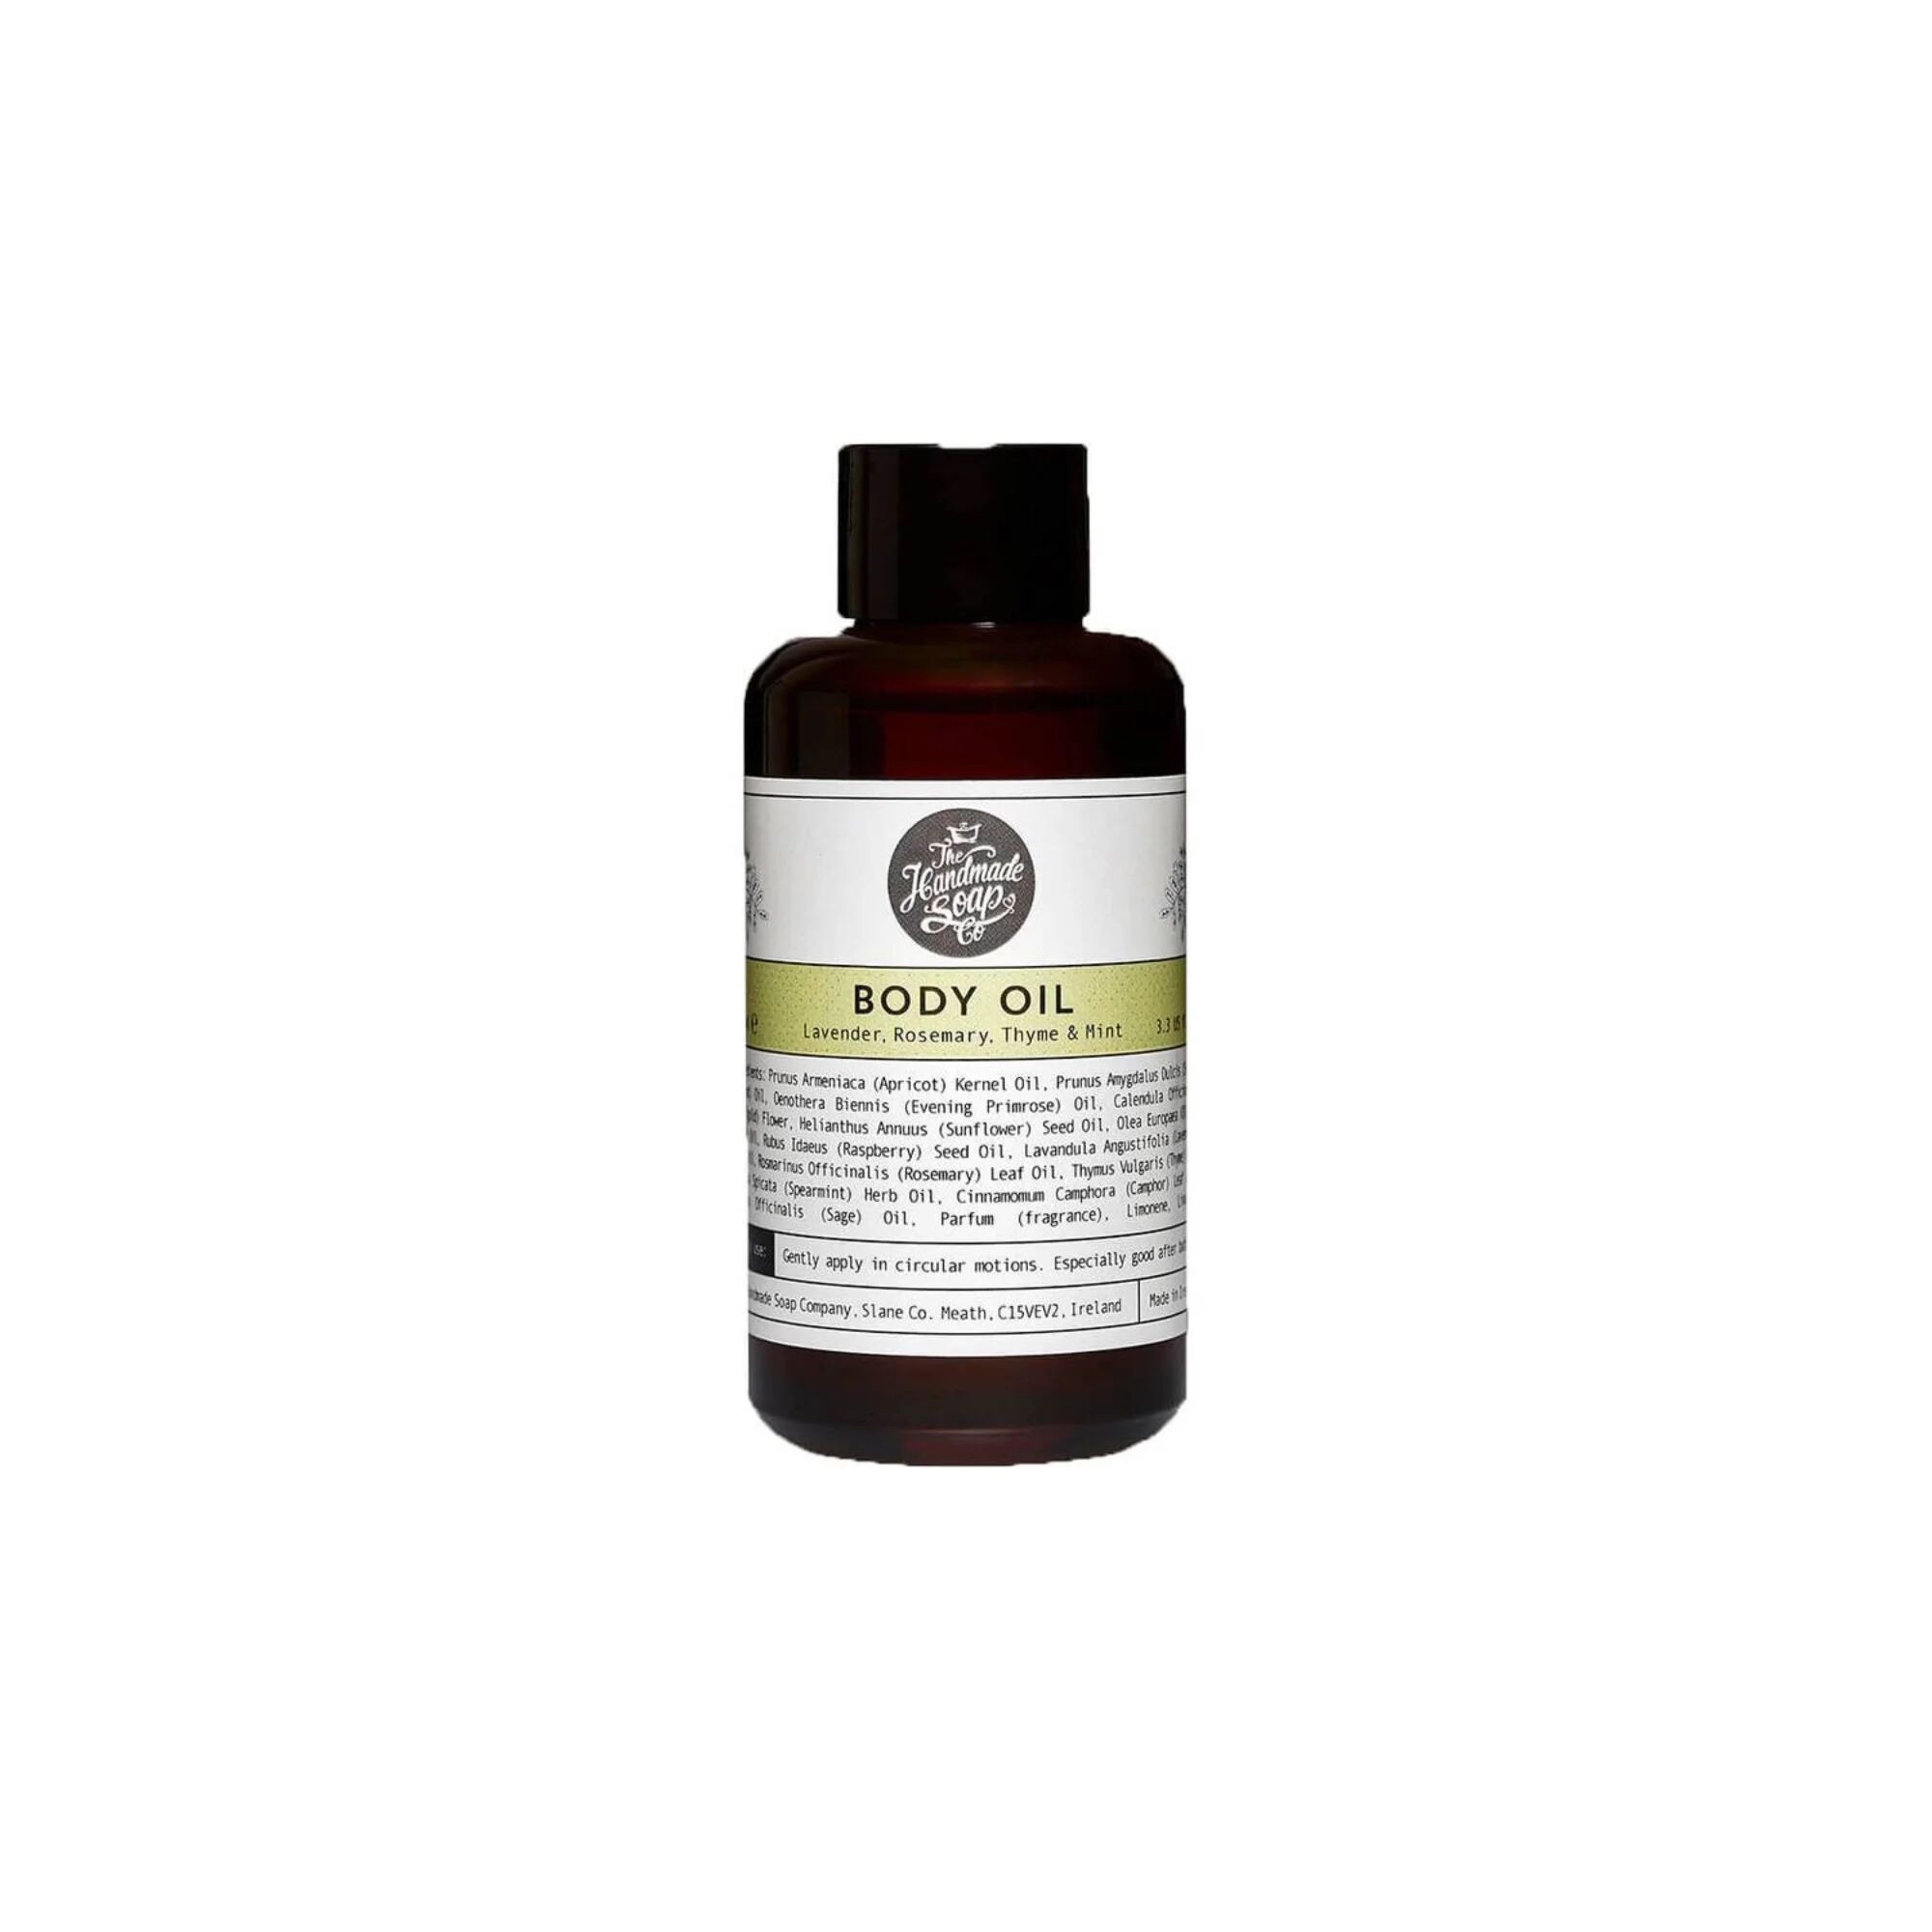 The Handmade Soap Company Lav., Rosemary, Thyme & Mint Body Oil (3.3 fl oz) #10086381